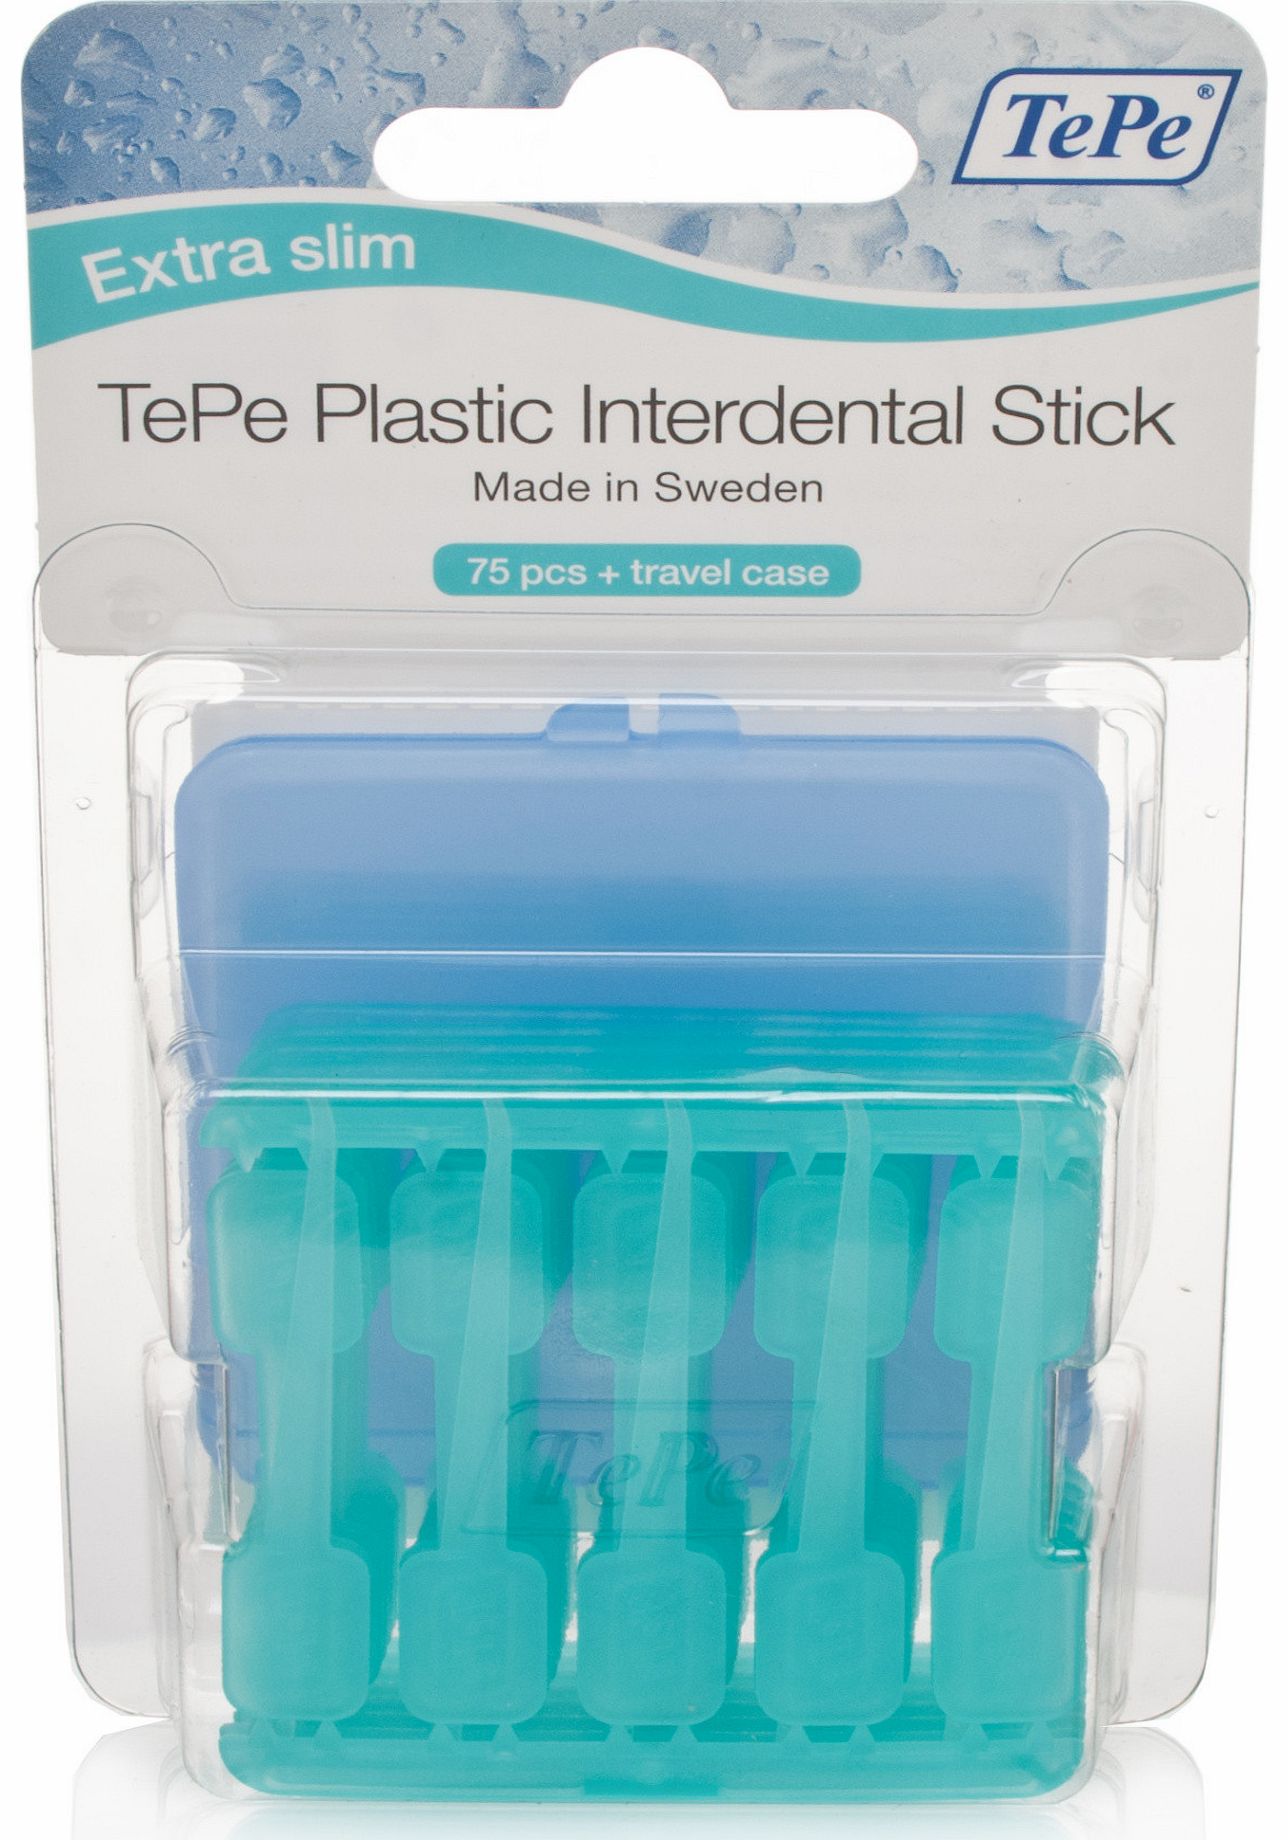 Tepe Plastic Interdental Sticks Extra Slim